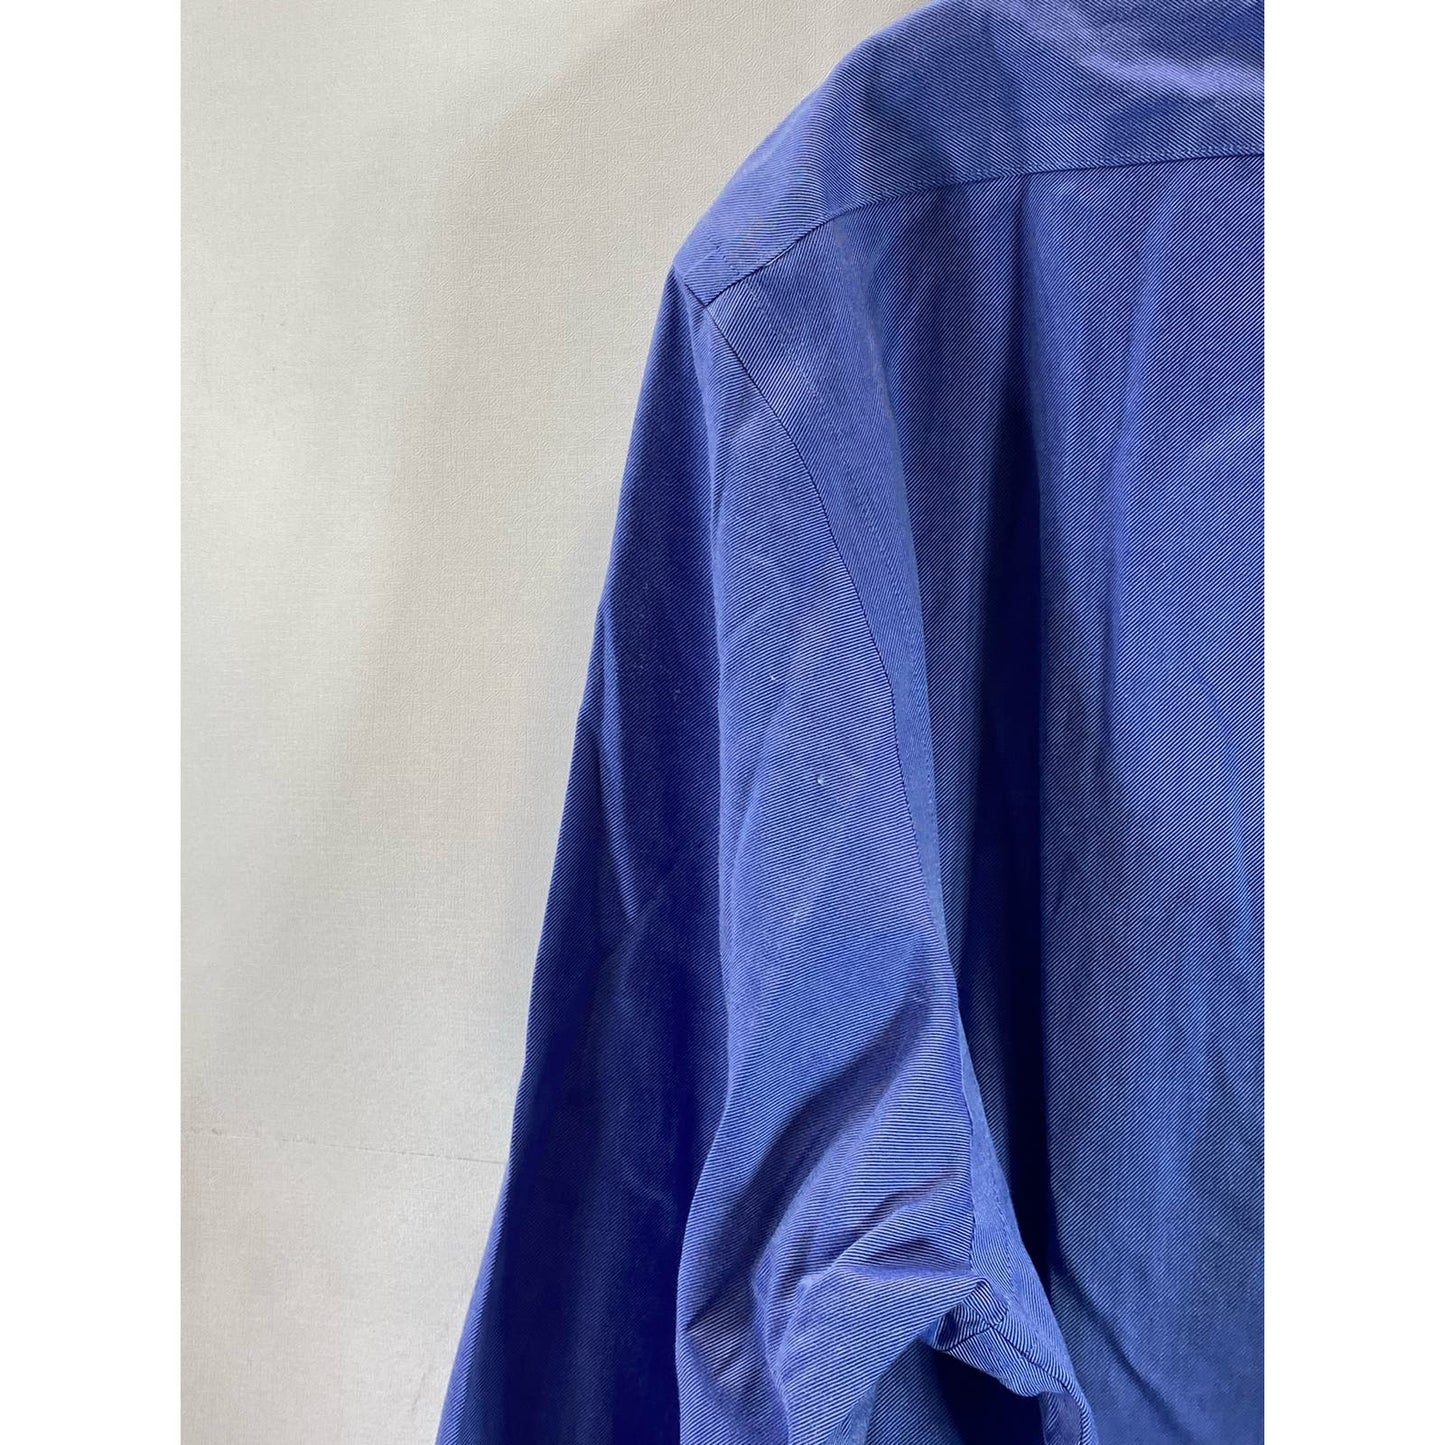 BANANA REPUBLIC Men's Blue Non-Iron Classic-Fit Button-Up Long Sleeve Shirt SZ L